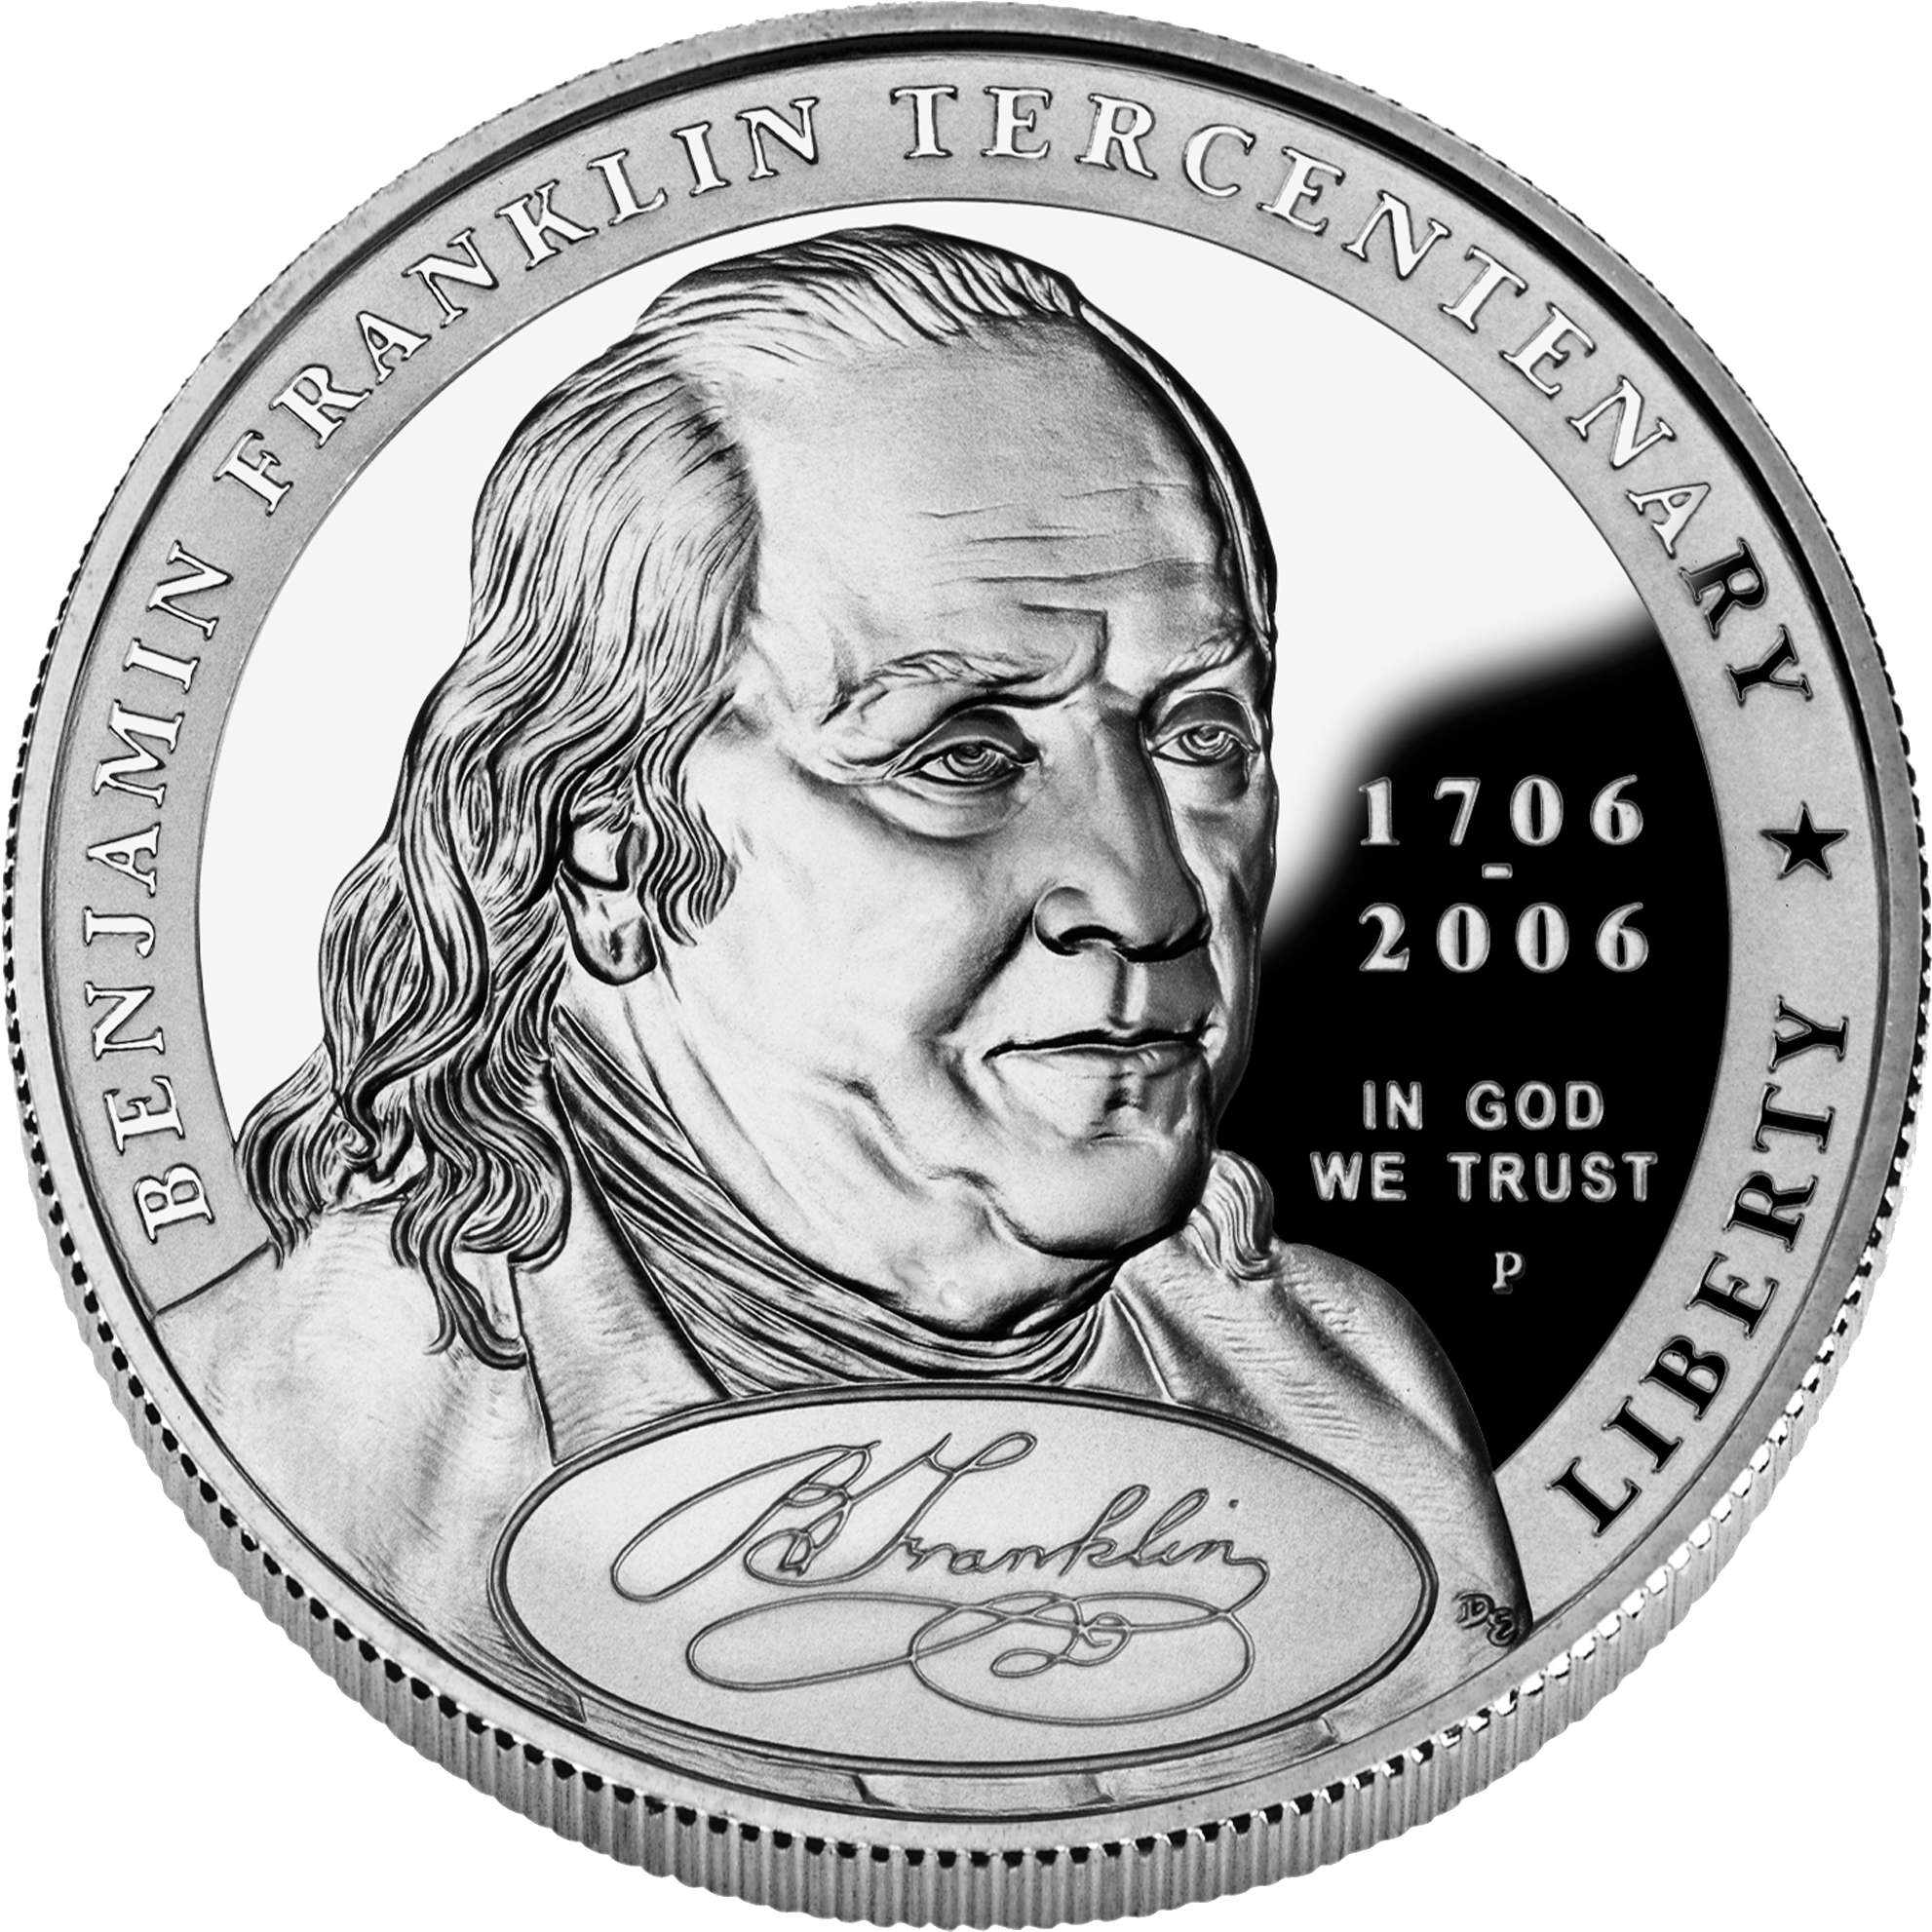 A Silver Coin With A Man's Face